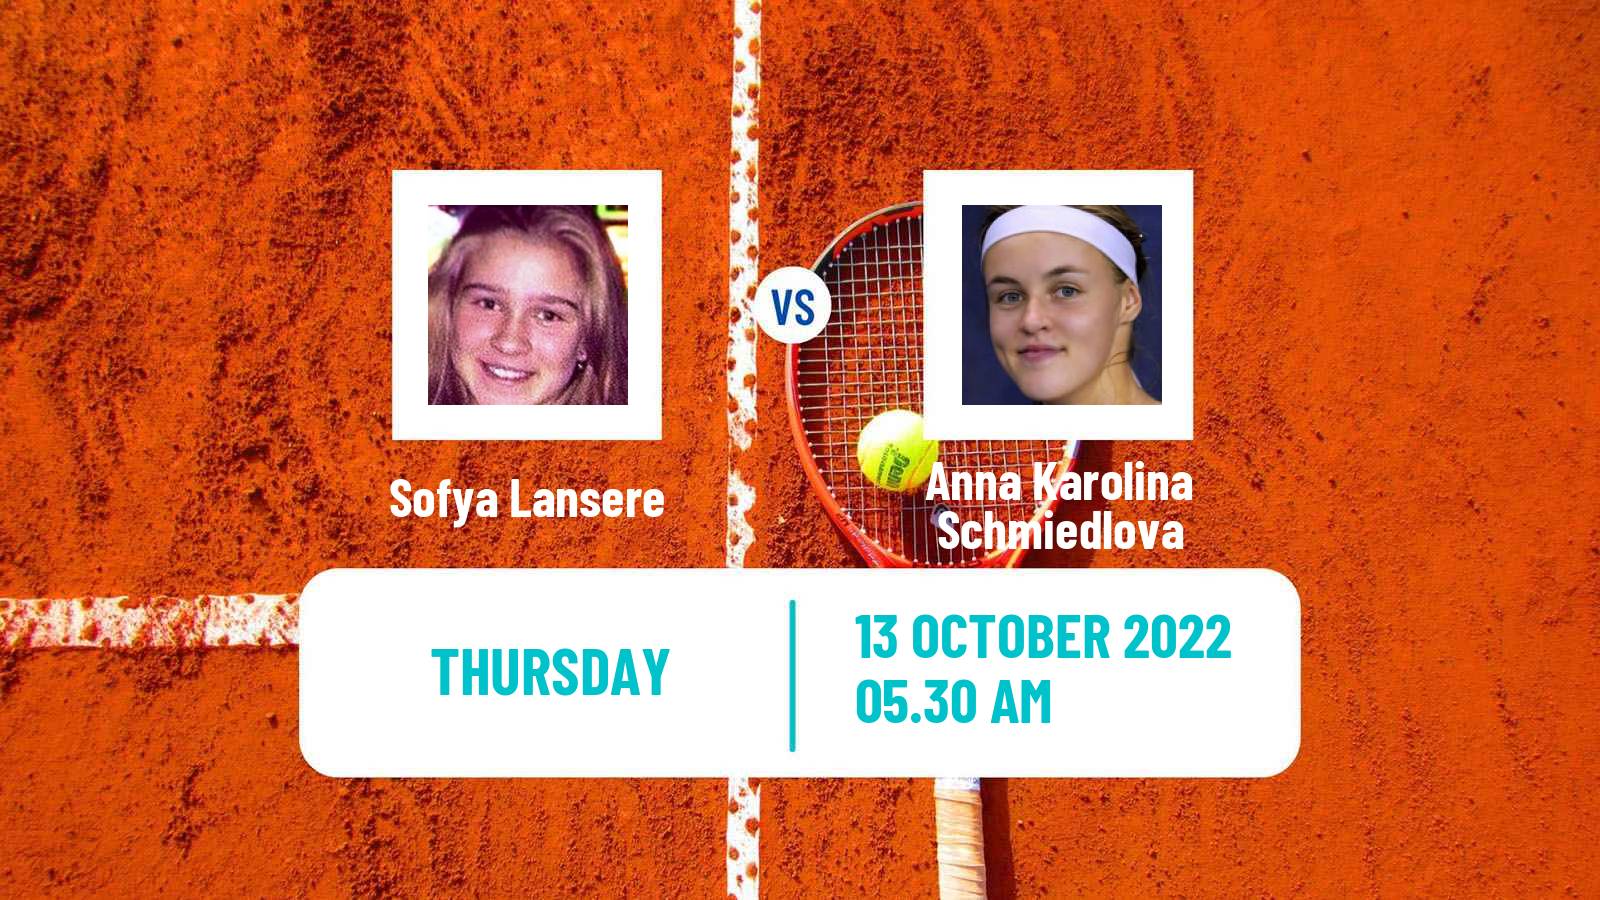 Tennis ITF Tournaments Sofya Lansere - Anna Karolina Schmiedlova